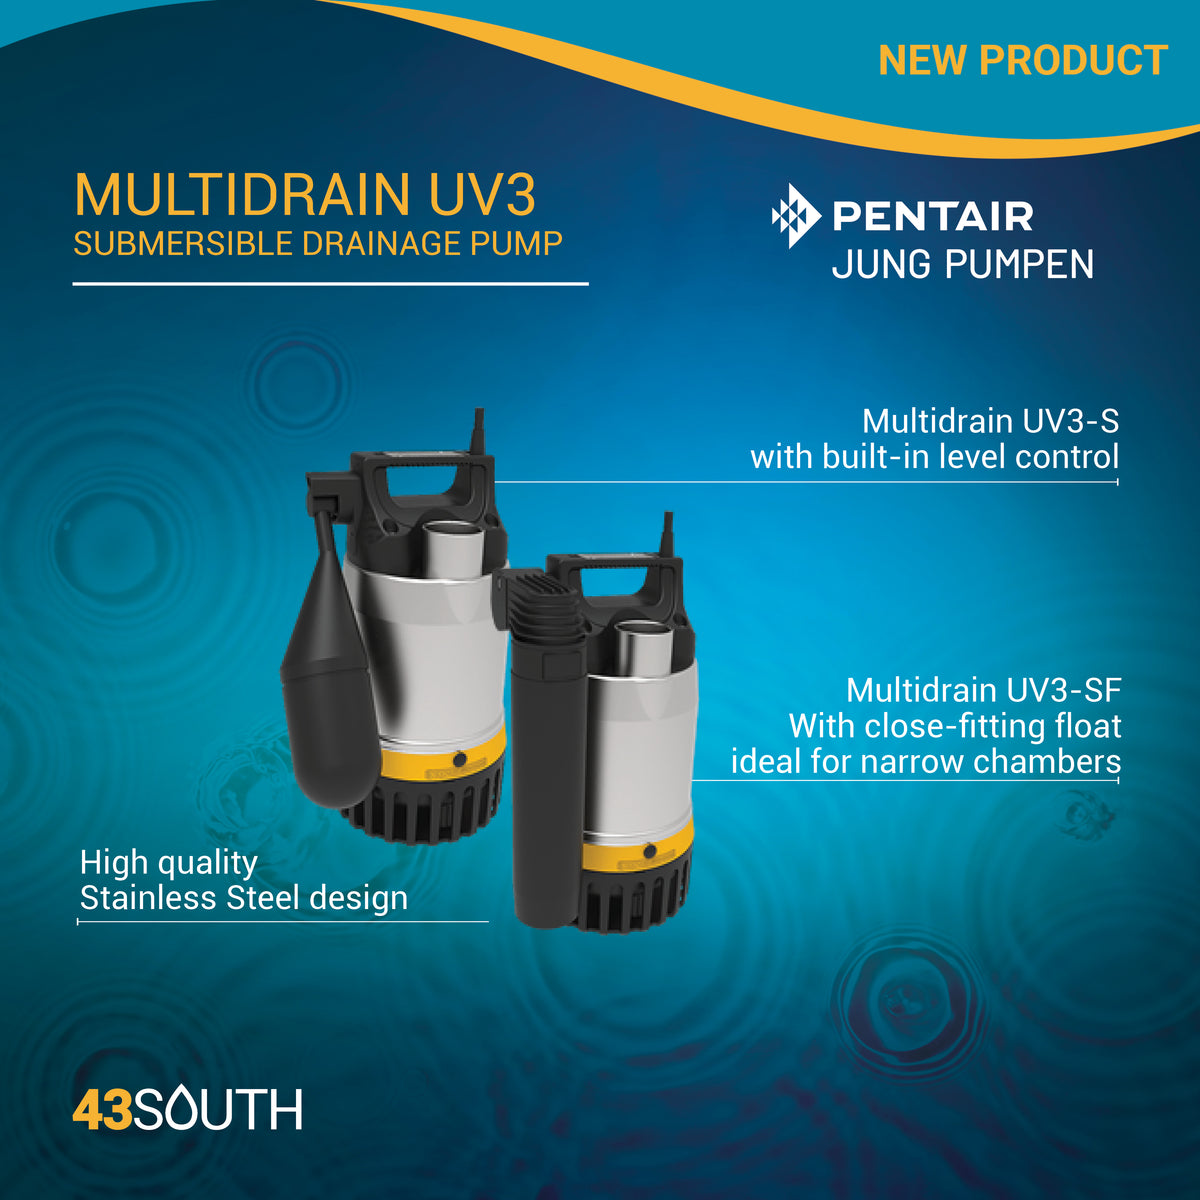 Multidrain UV3 Series - NEW PRODUCT